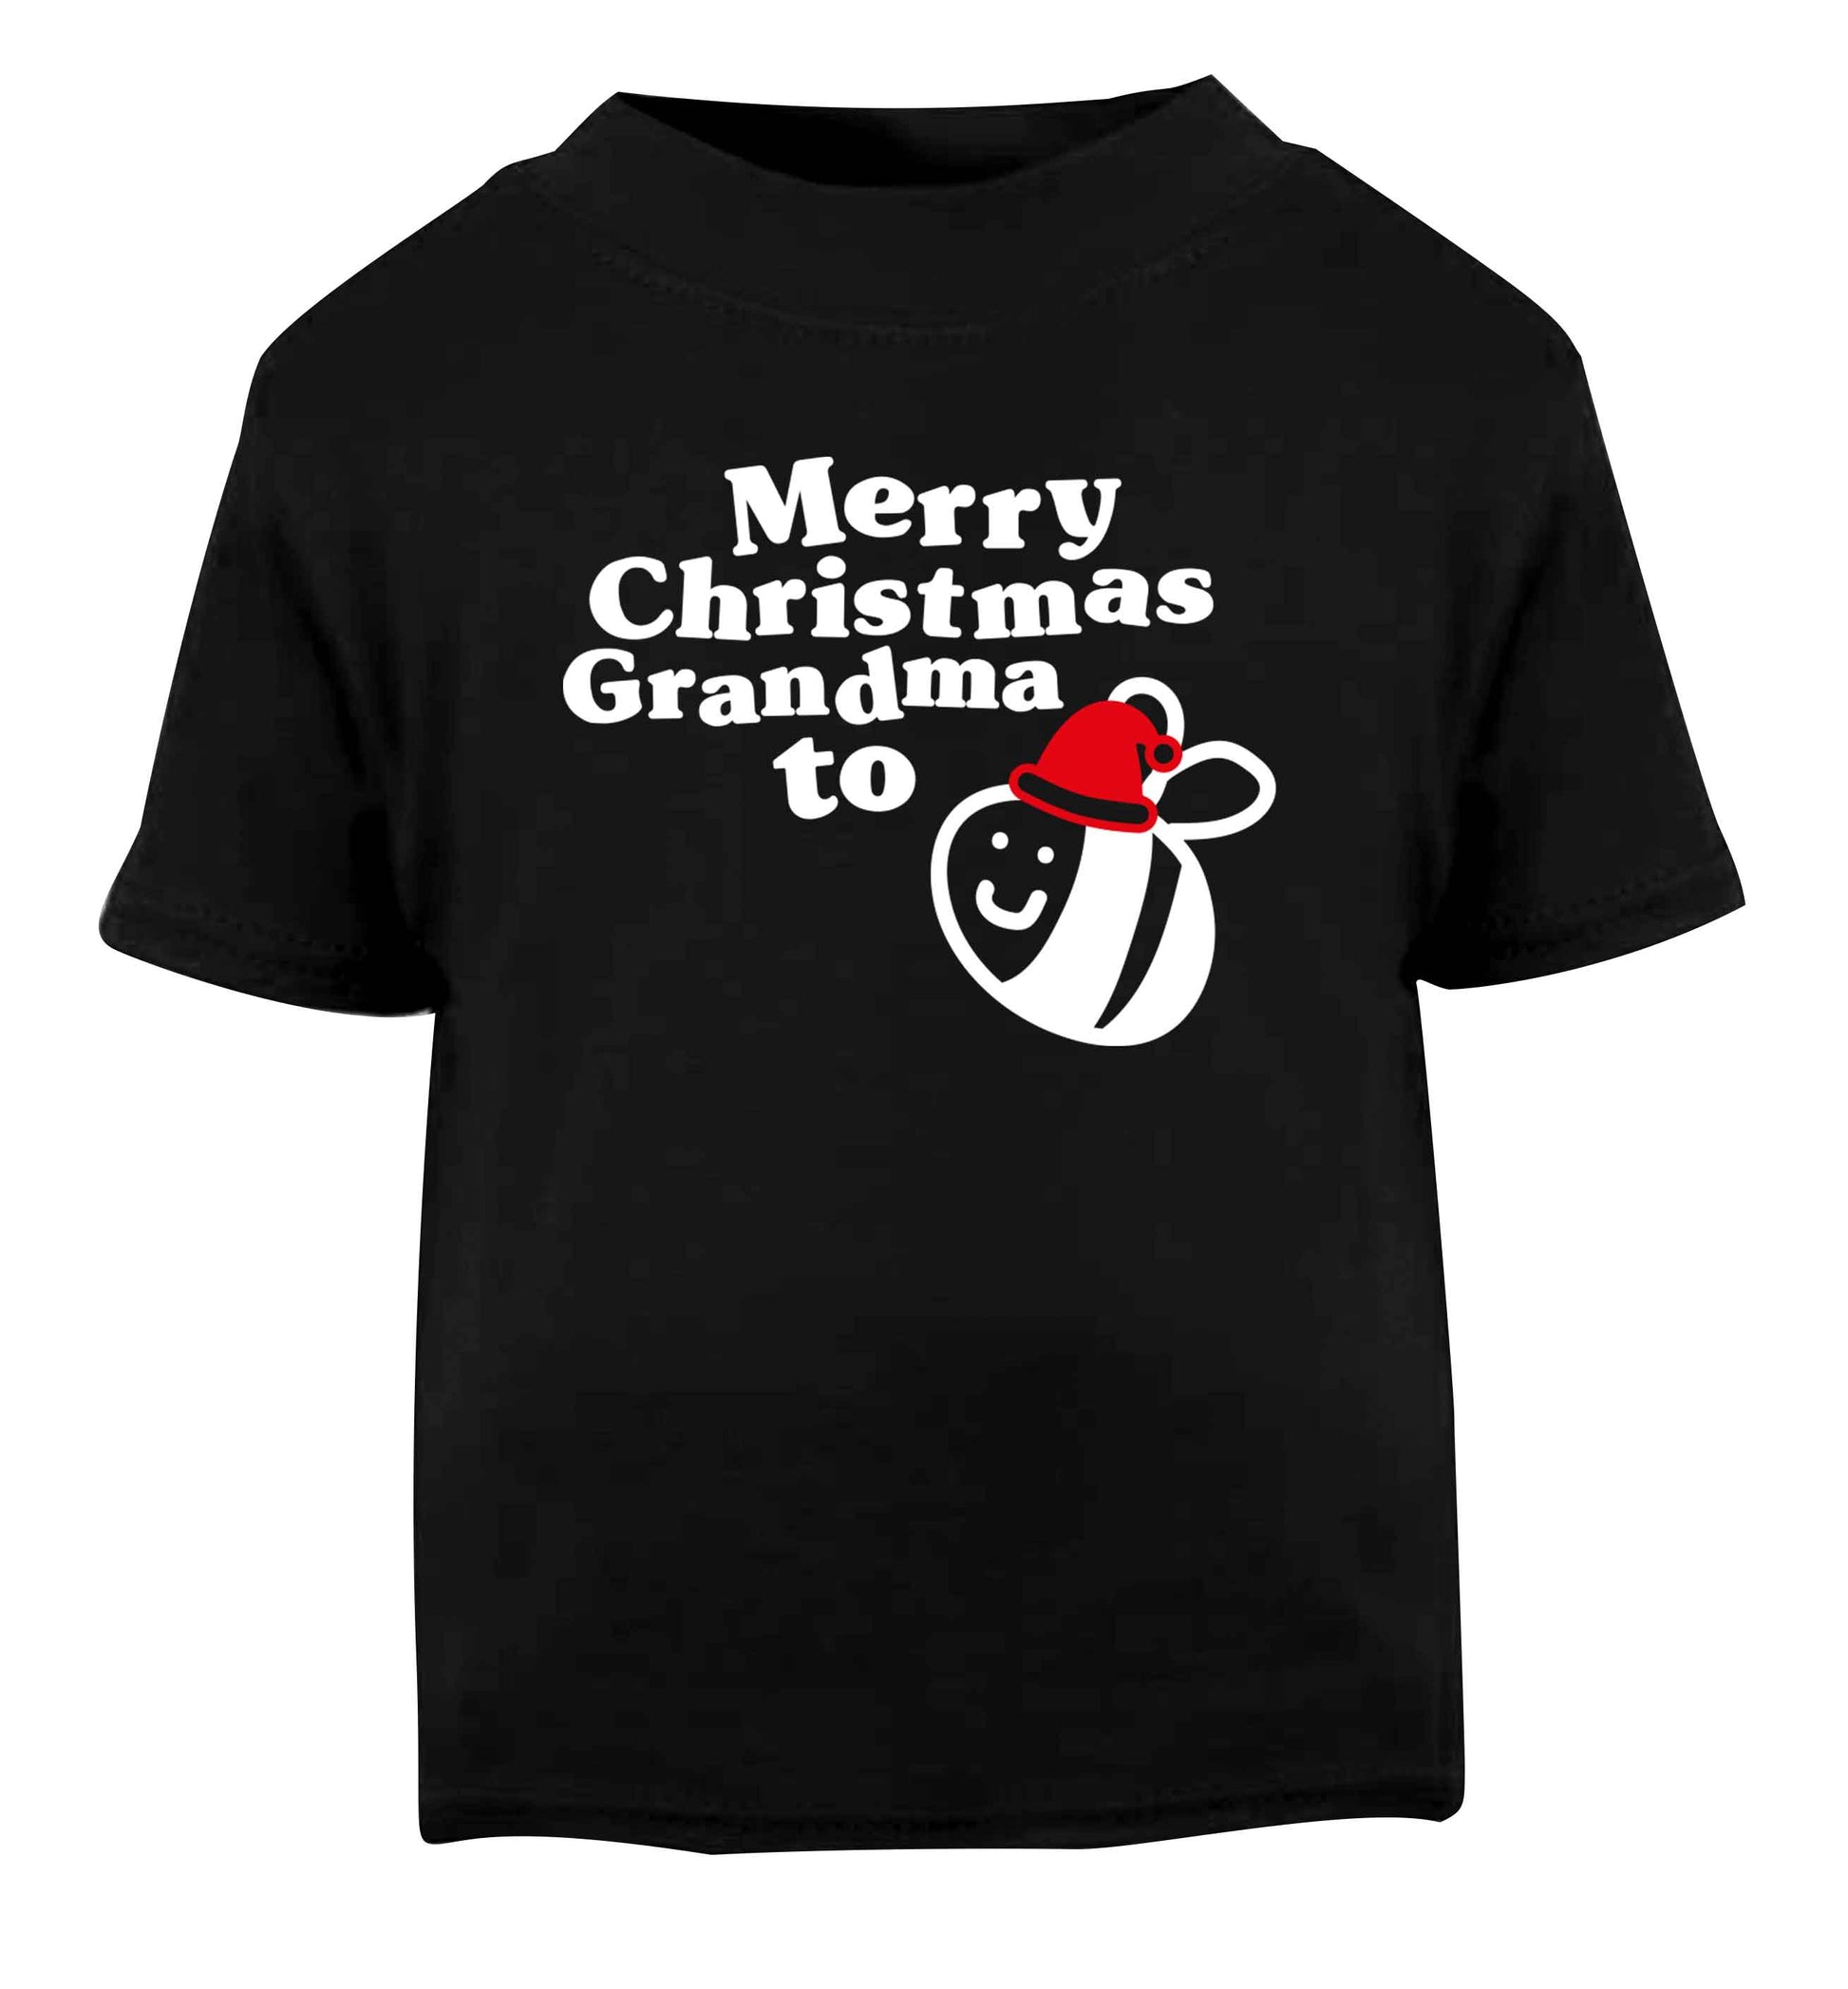 Merry Christmas grandma to be Black Baby Toddler Tshirt 2 years